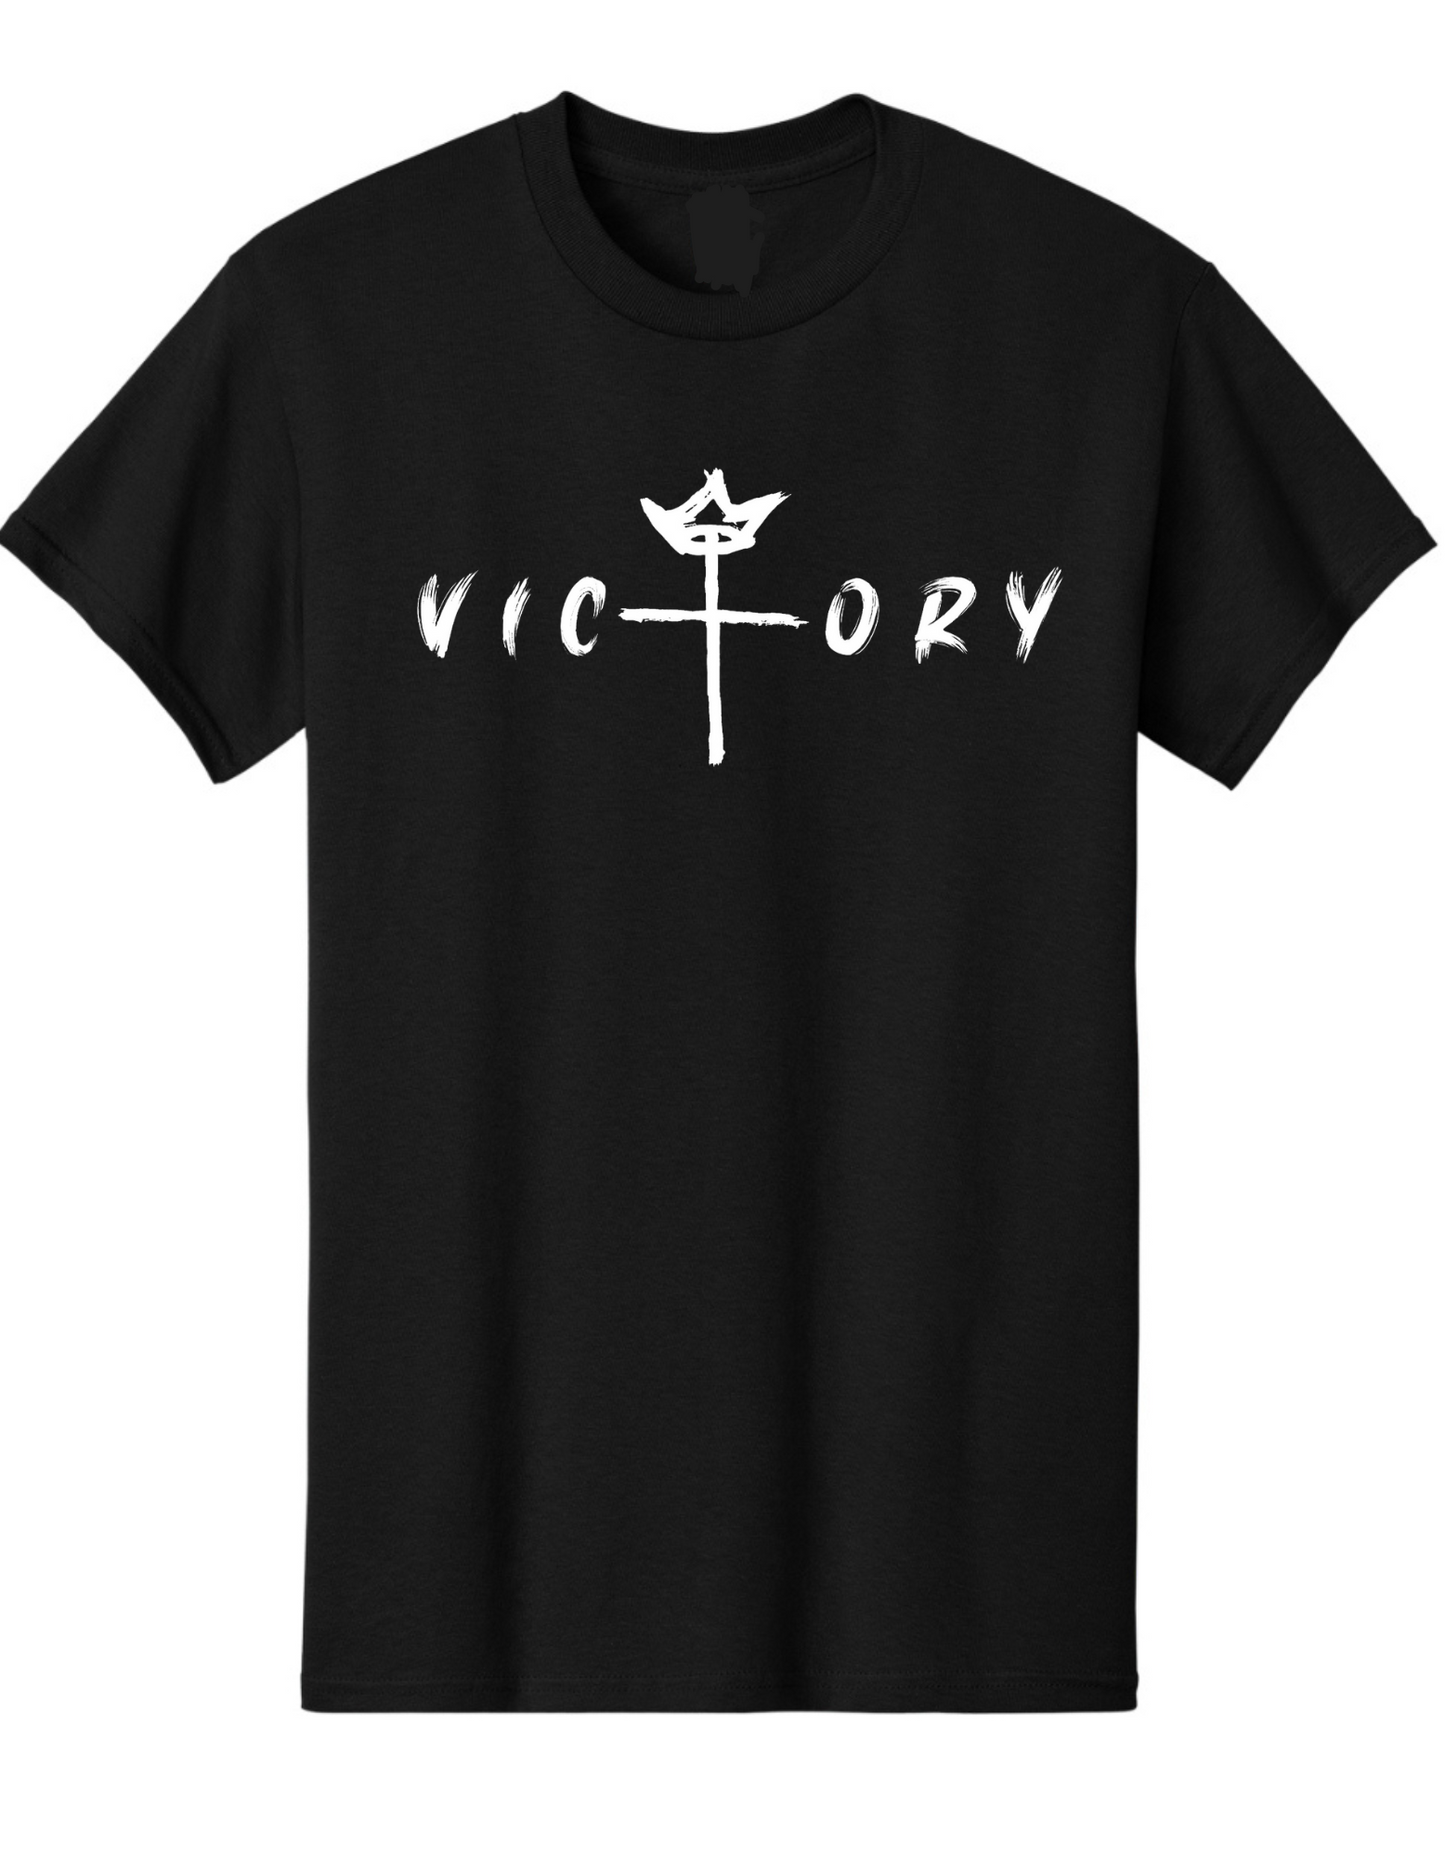 “Victory” t-shirt